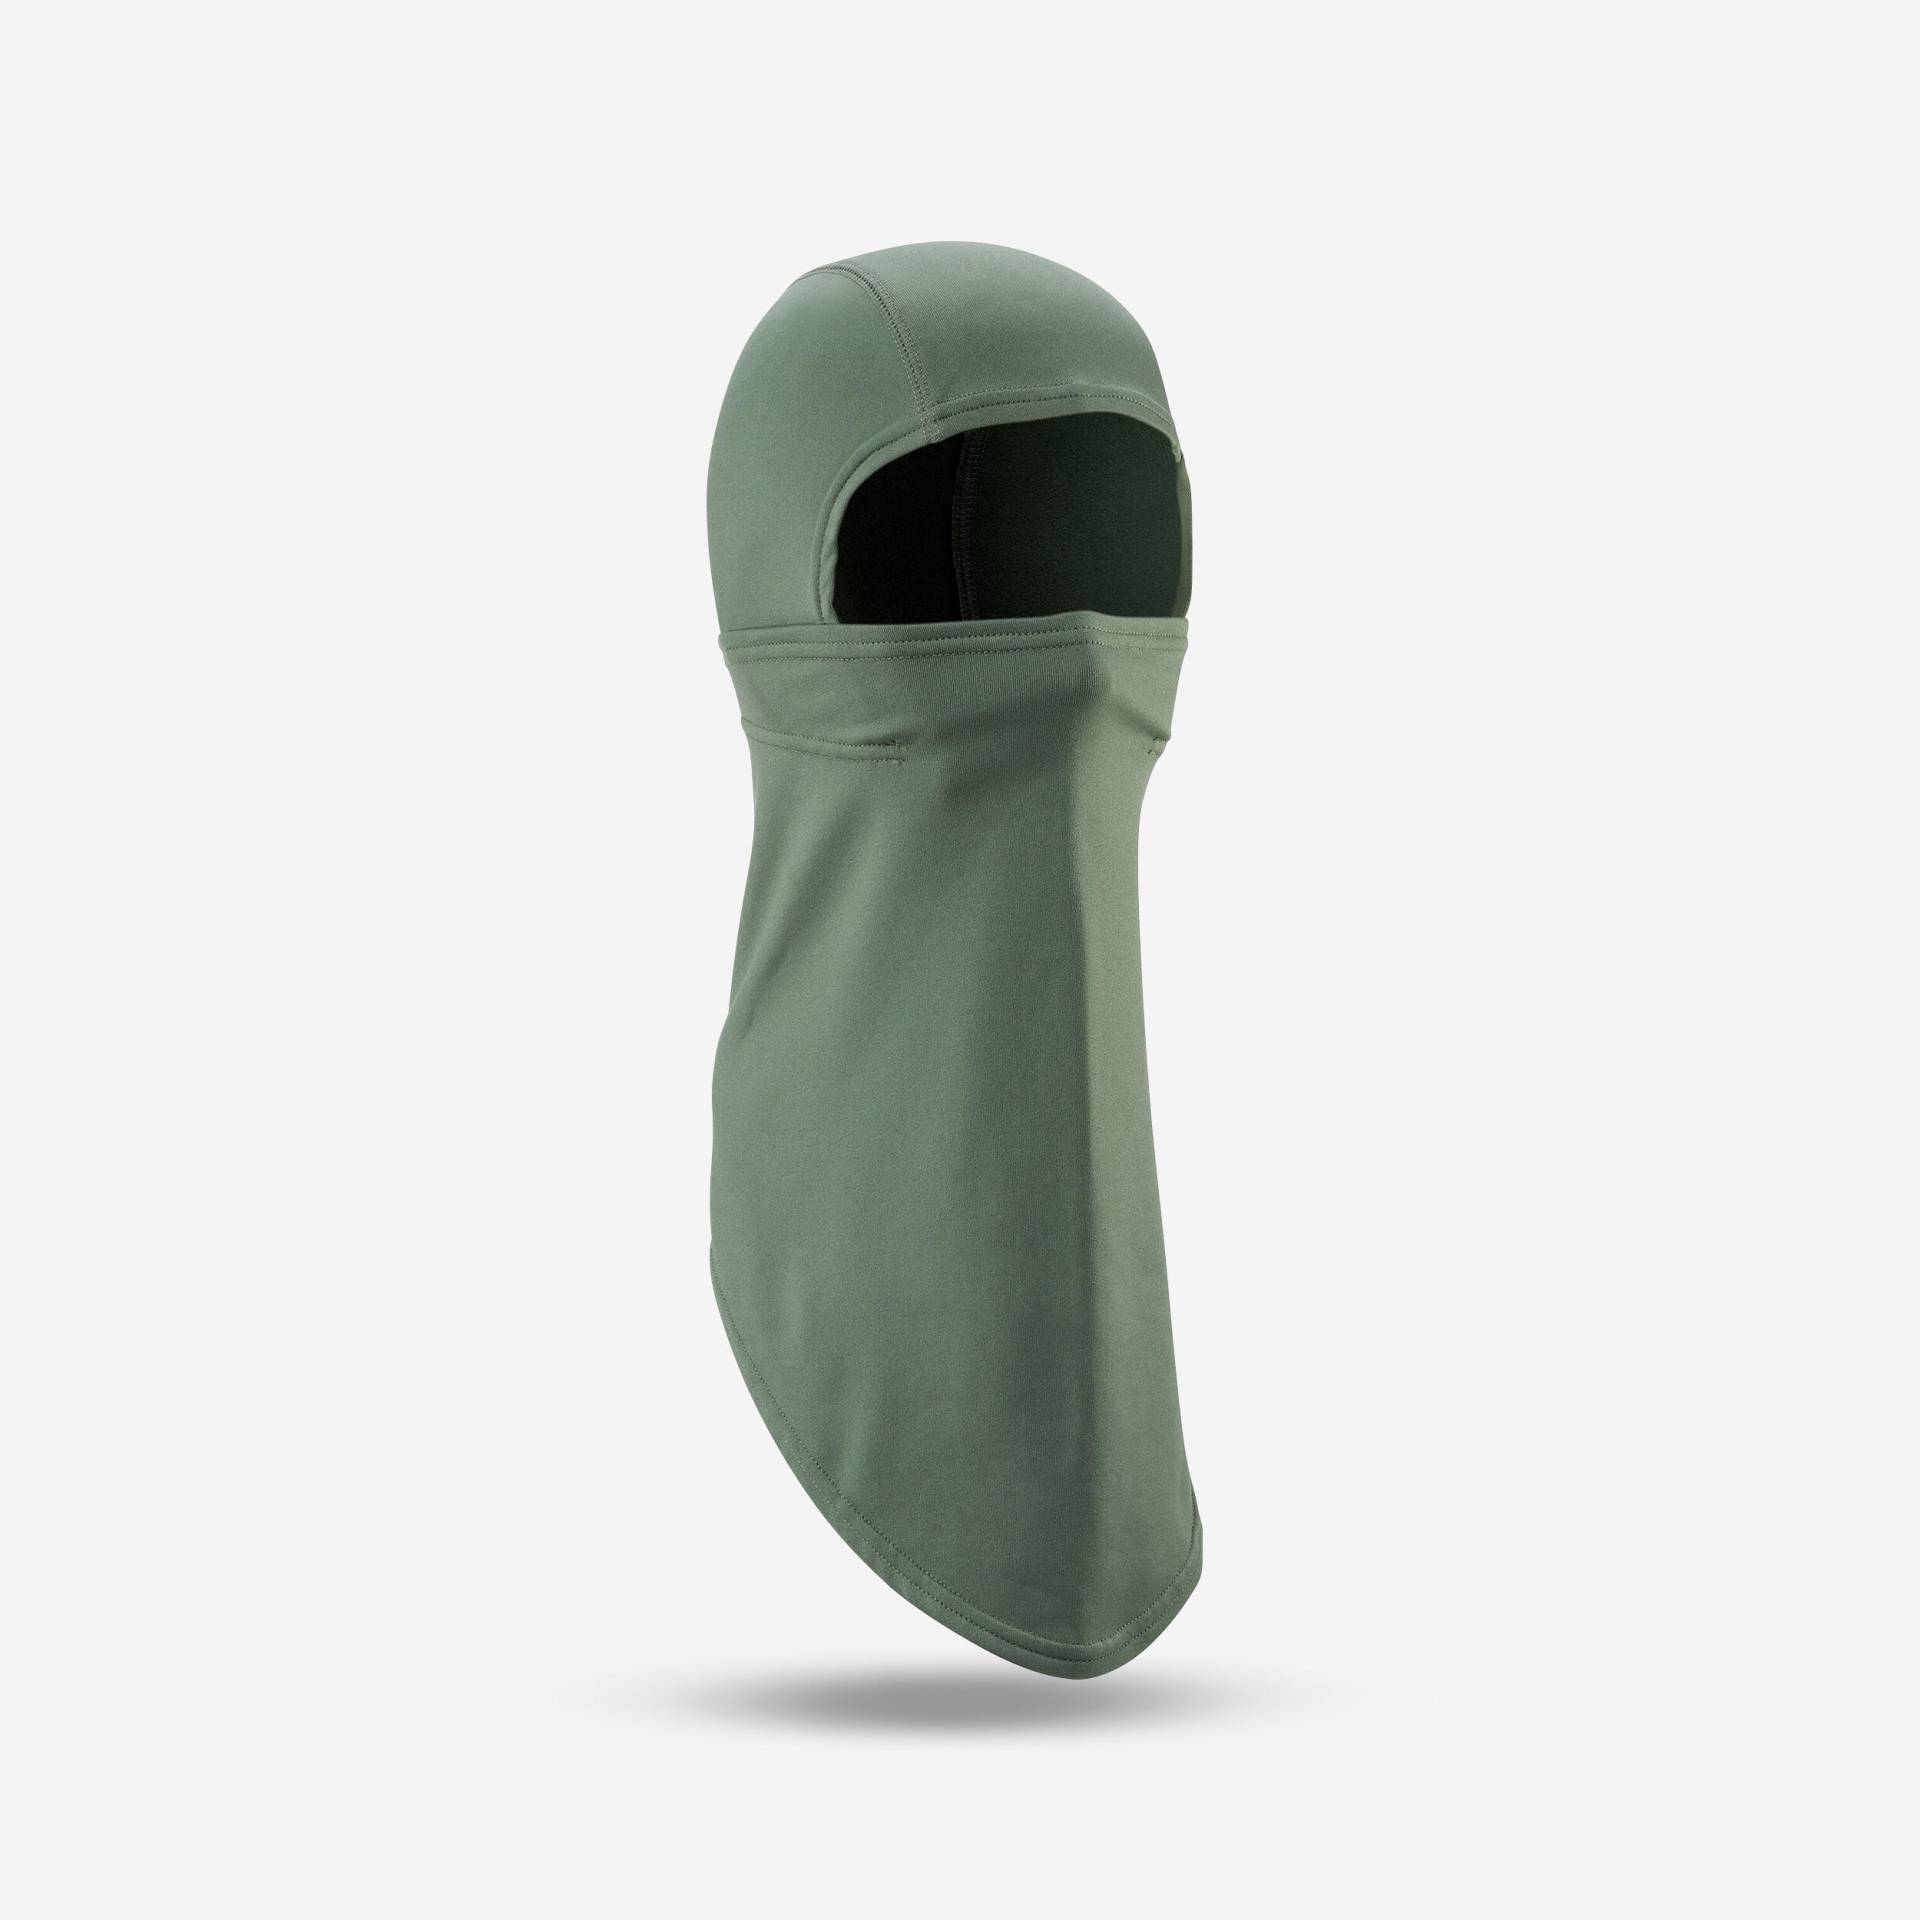 Unterhelmmütze Sturmhaube Damen/Herren - Ninja dunkelgrün von WEDZE